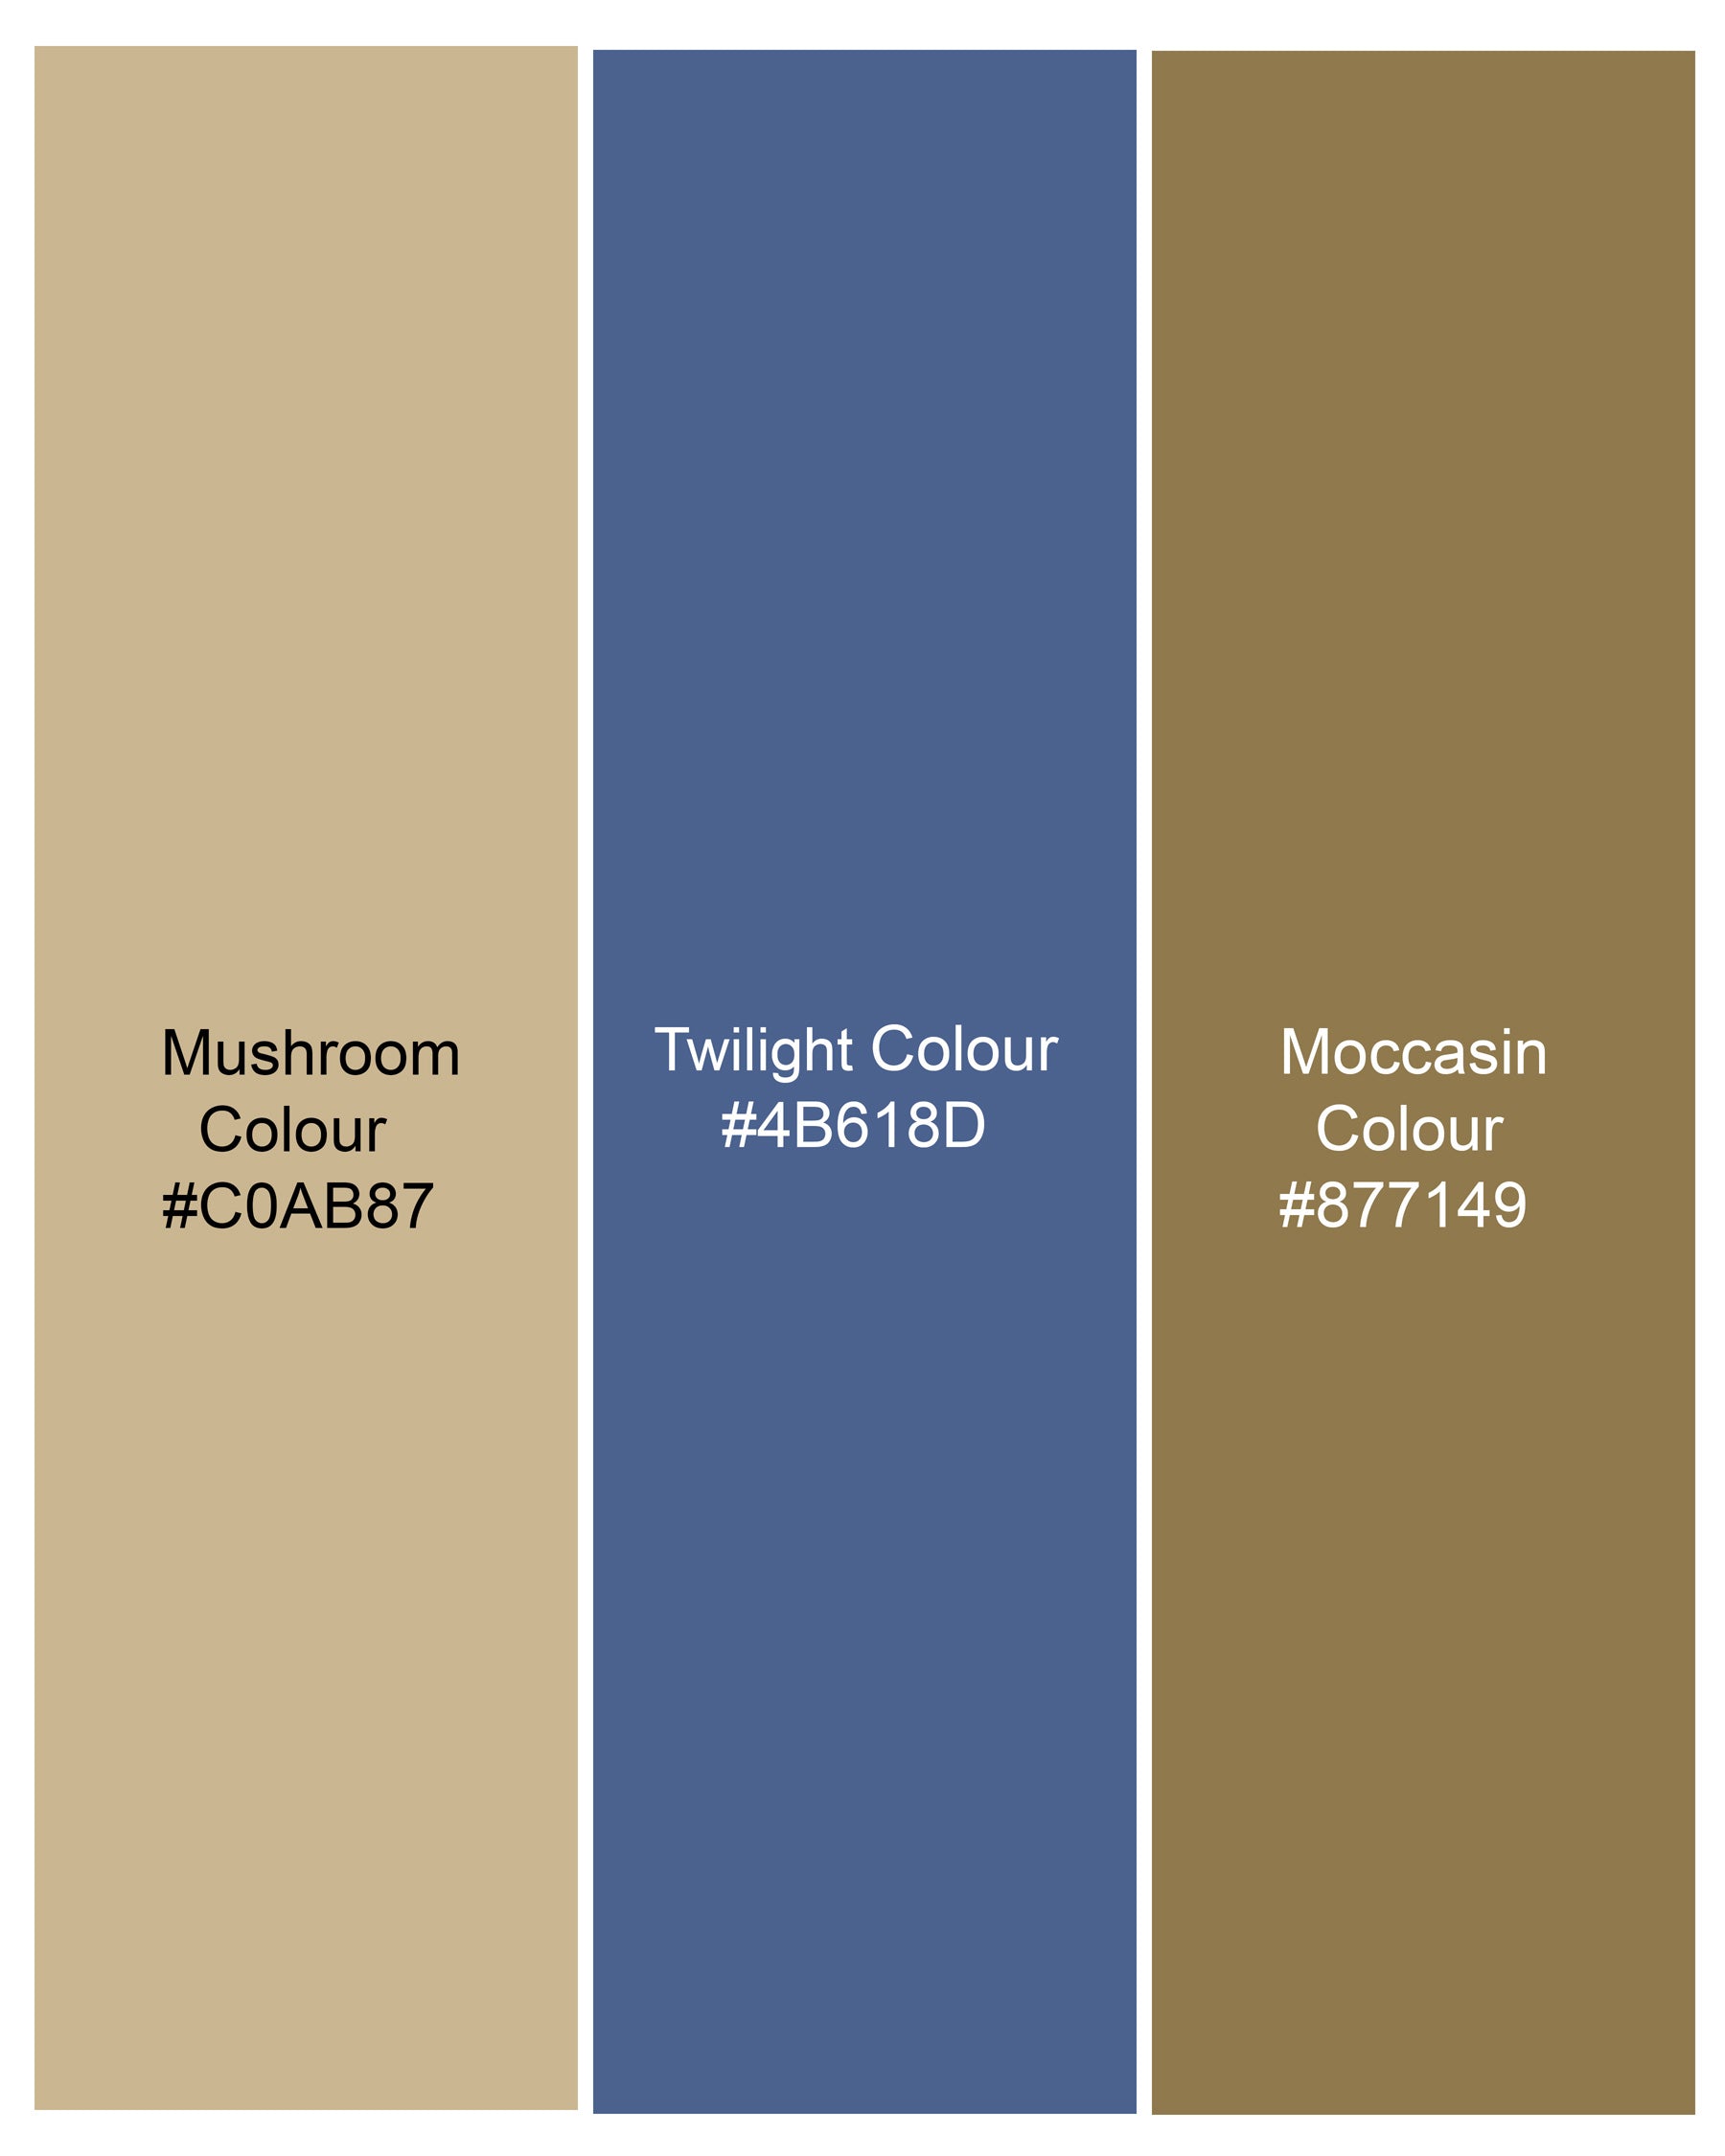 Mushroom Light Brown Checkered Bandhgala Suit ST2139-BG-36, ST2139-BG-38, ST2139-BG-40, ST2139-BG-42, ST2139-BG-44, ST2139-BG-46, ST2139-BG-48, ST2139-BG-50, ST2139-BG-52, ST2139-BG-54, ST2139-BG-56, ST2139-BG-58, ST2139-BG-60